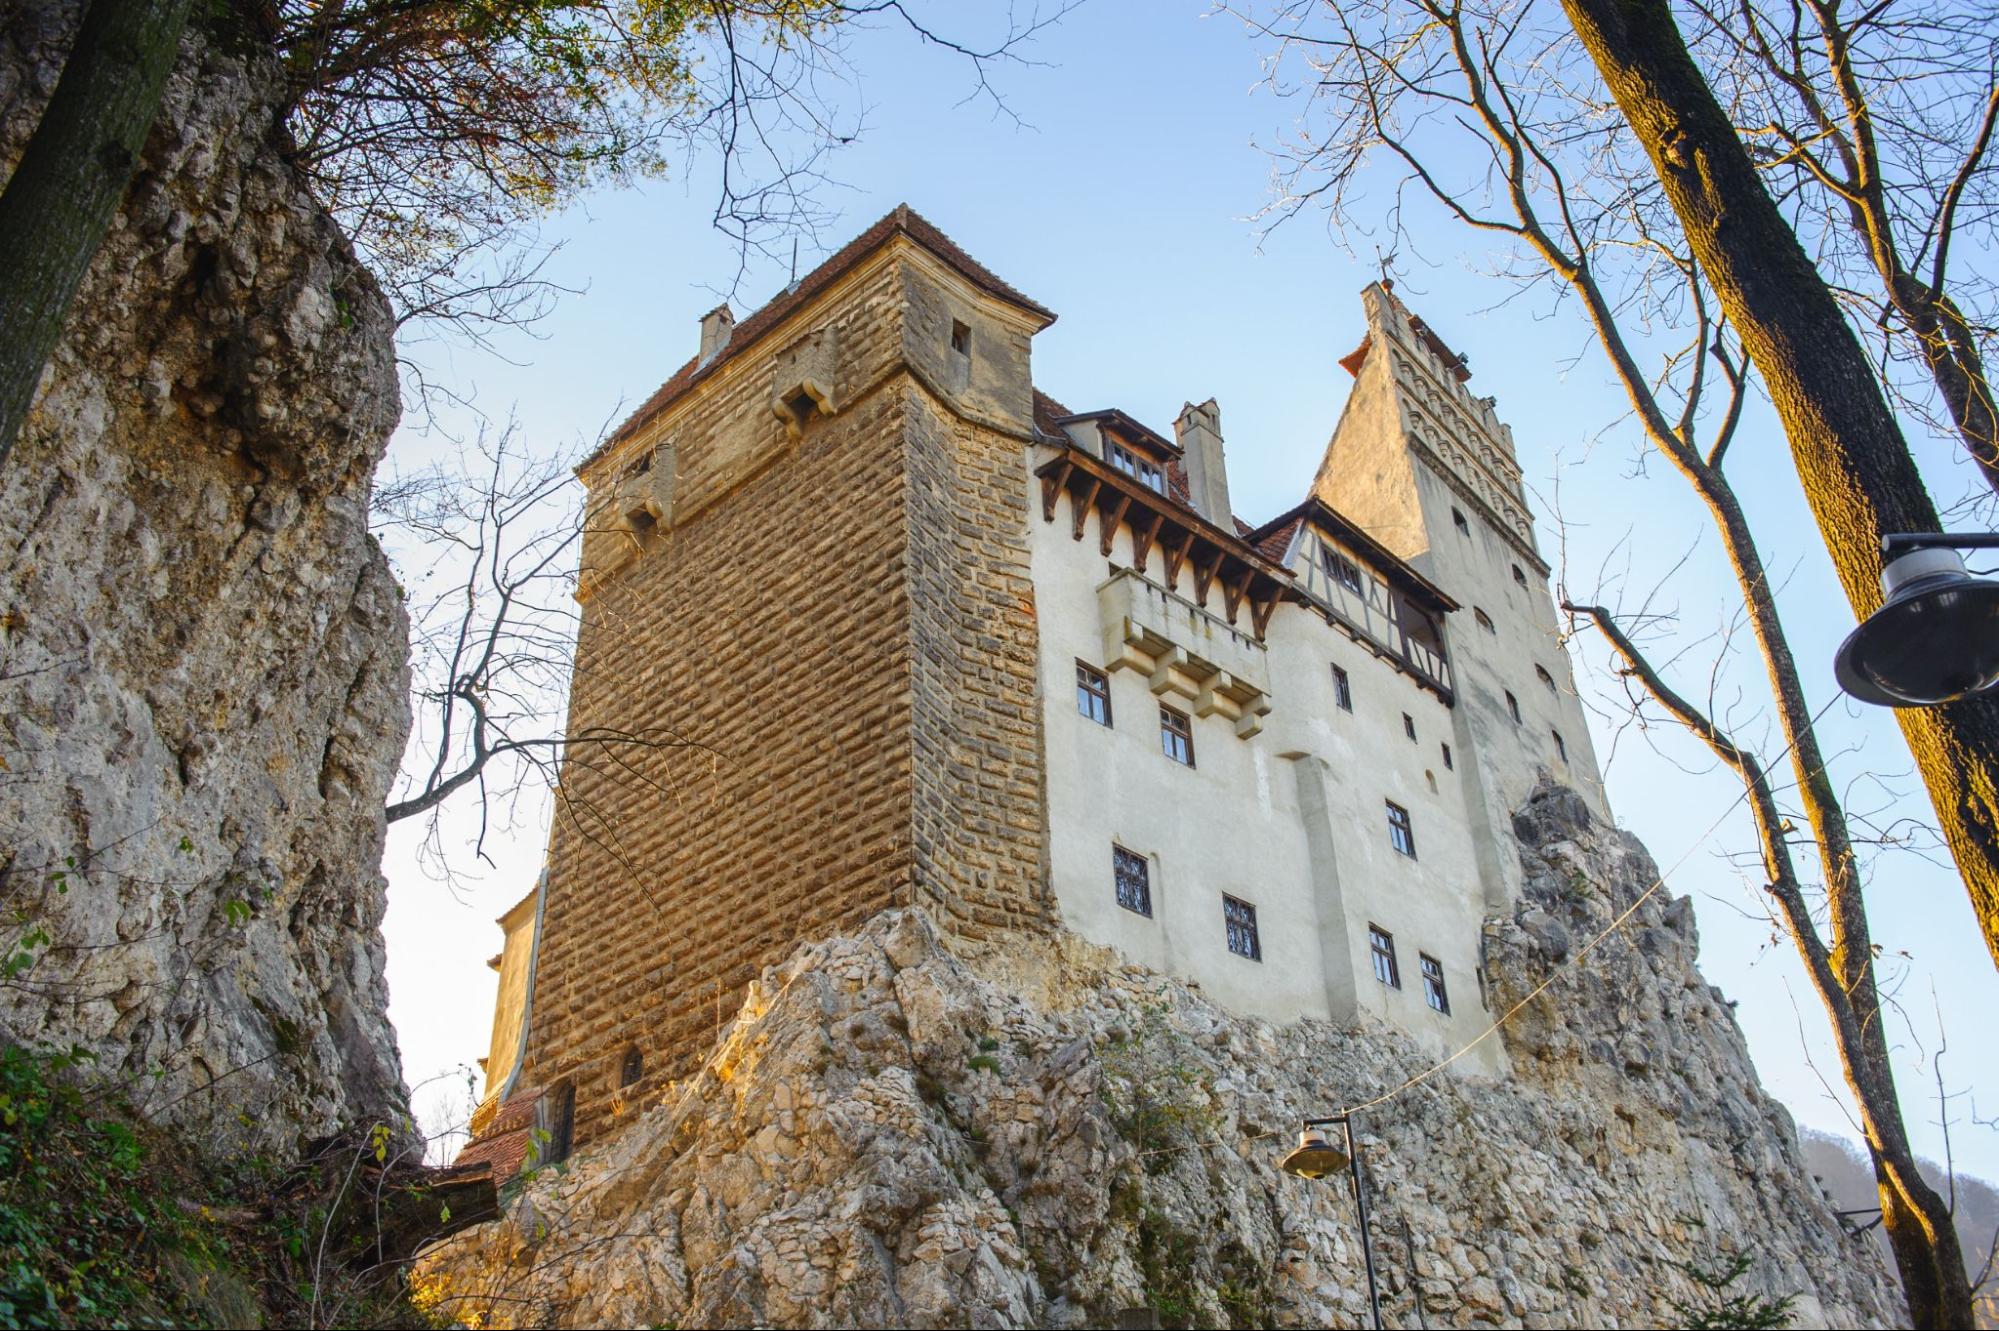 Dracula's Castle (Bran Castle), a famous castle of the Count Vlad Tepes, Bran, Romania